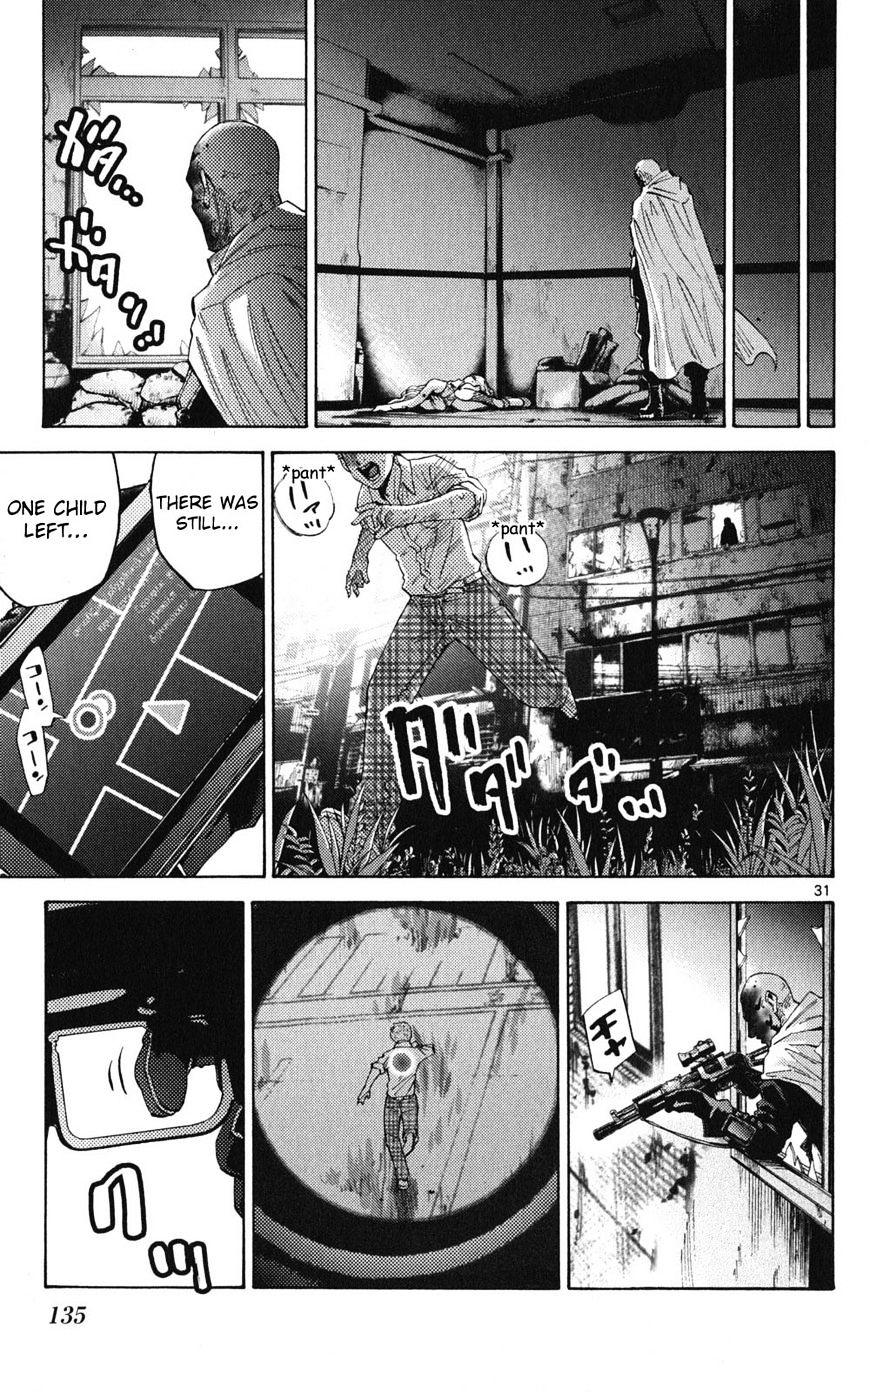 Imawa No Kuni No Alice Chapter 49.1 : Side Story 5 - King Of Spades (1) page 29 - Mangakakalot